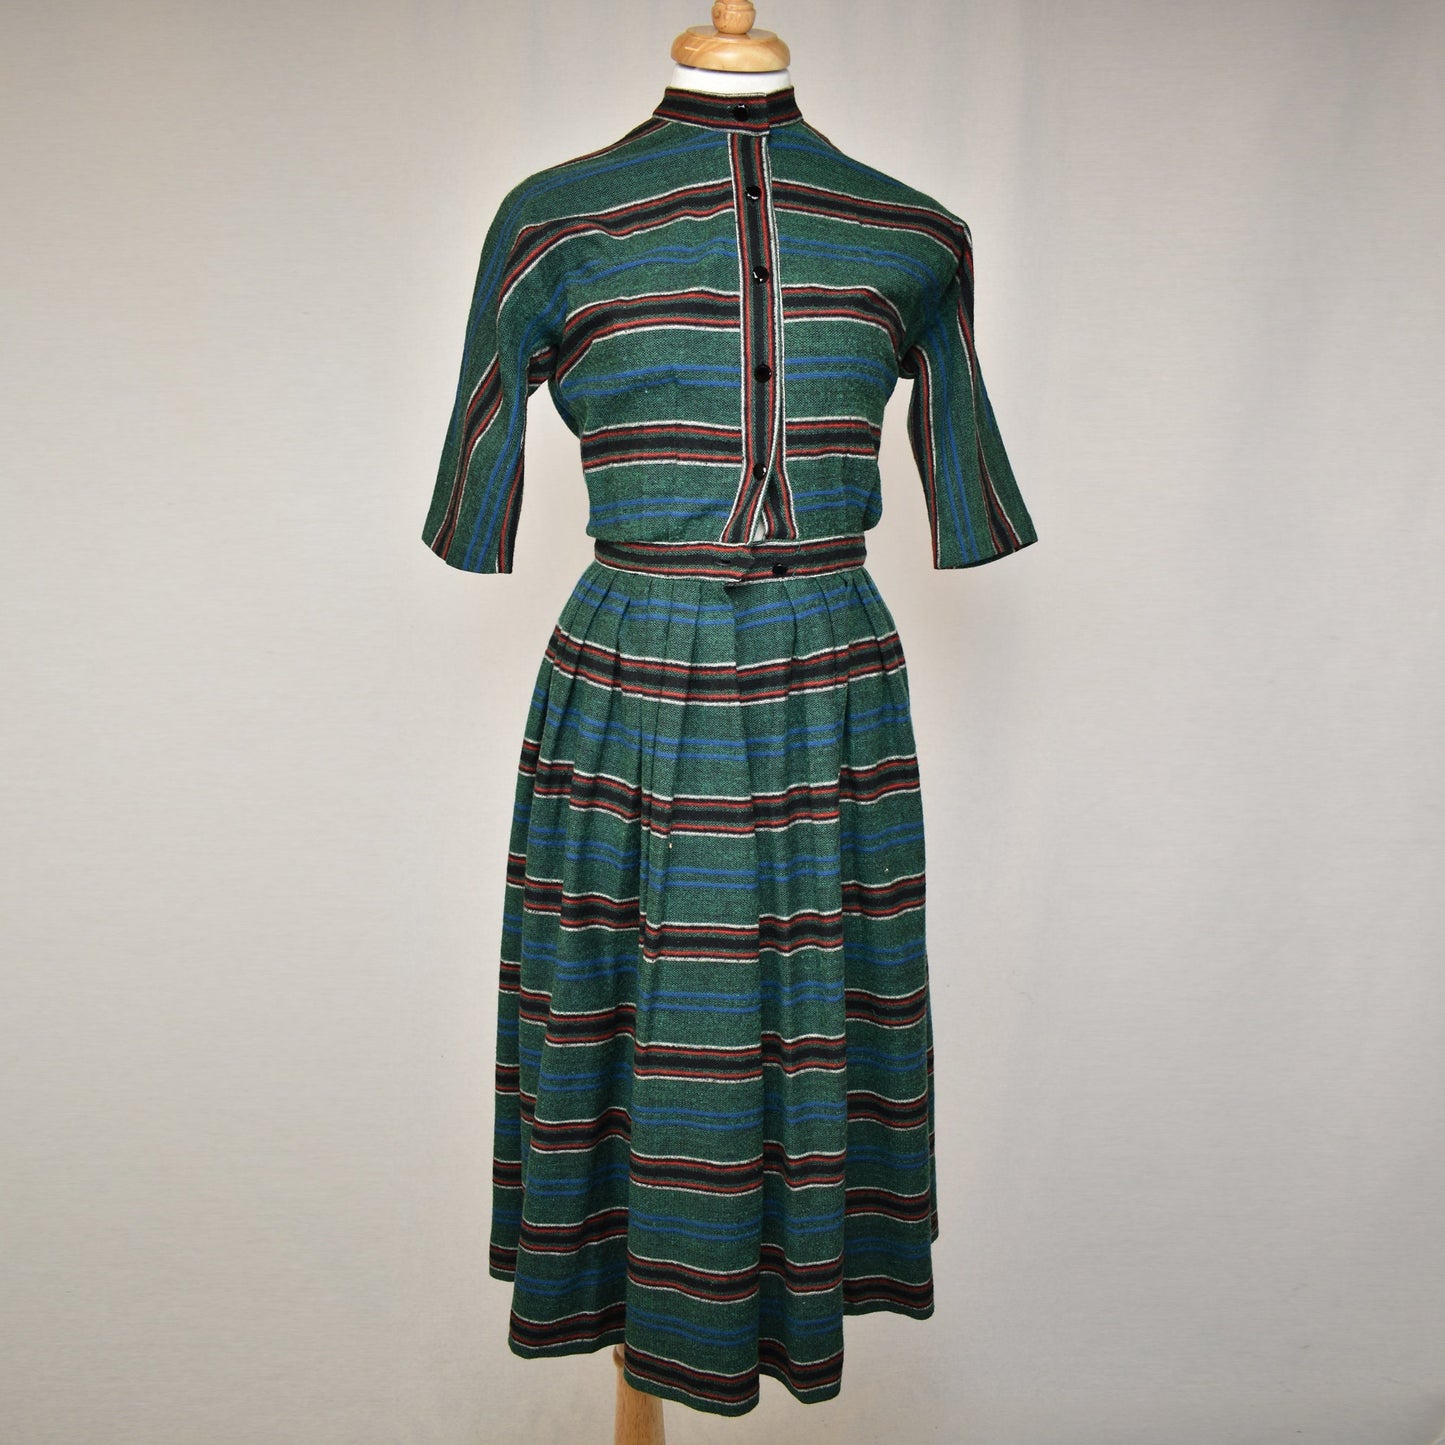 Vintage 50s Striped Knit Dress - Tiny Waist - Full Skirt - Dolman Sleeve - Green Blue Red White & Black - Sacony Brand